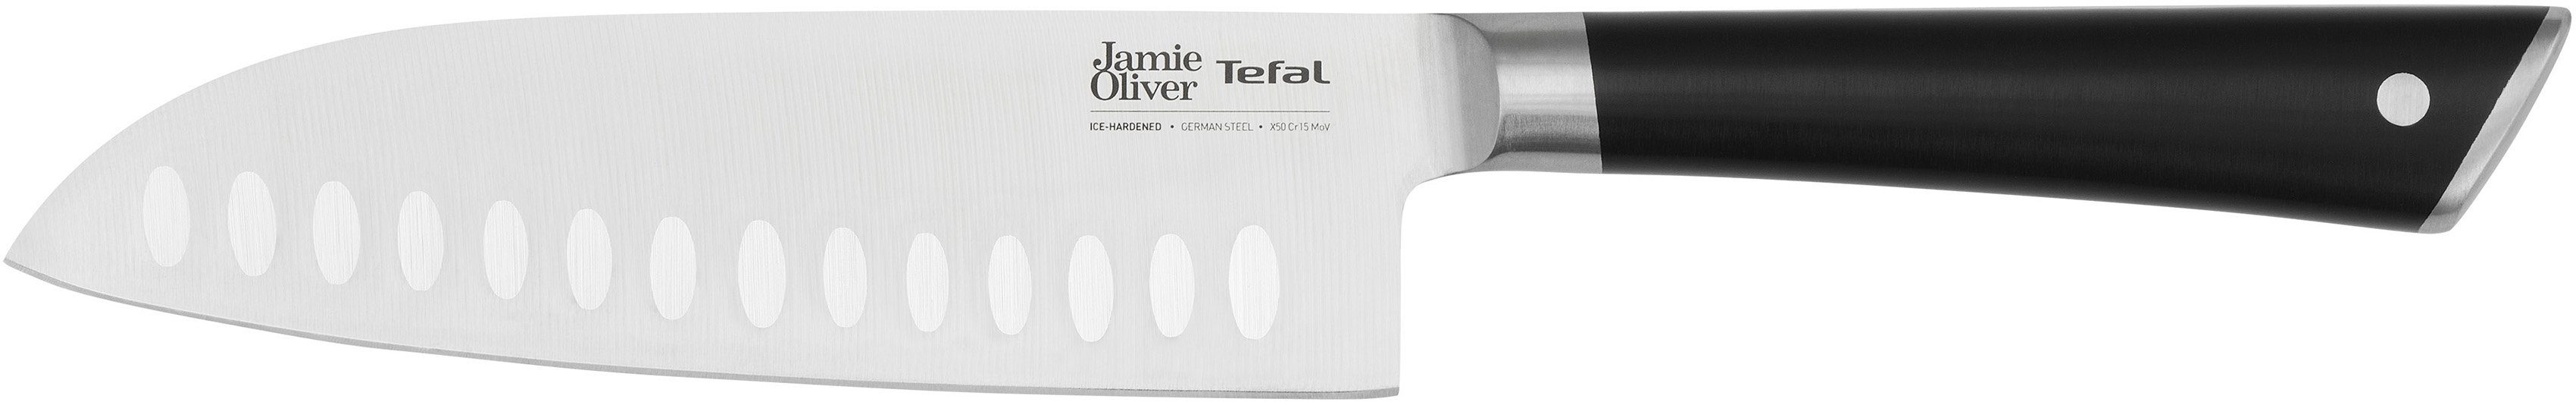 Tefal Ножі і приладдя Jamie Oliver K26715, hohe Leistung, unverwechselbares Design, widerstandsfähig/langlebig